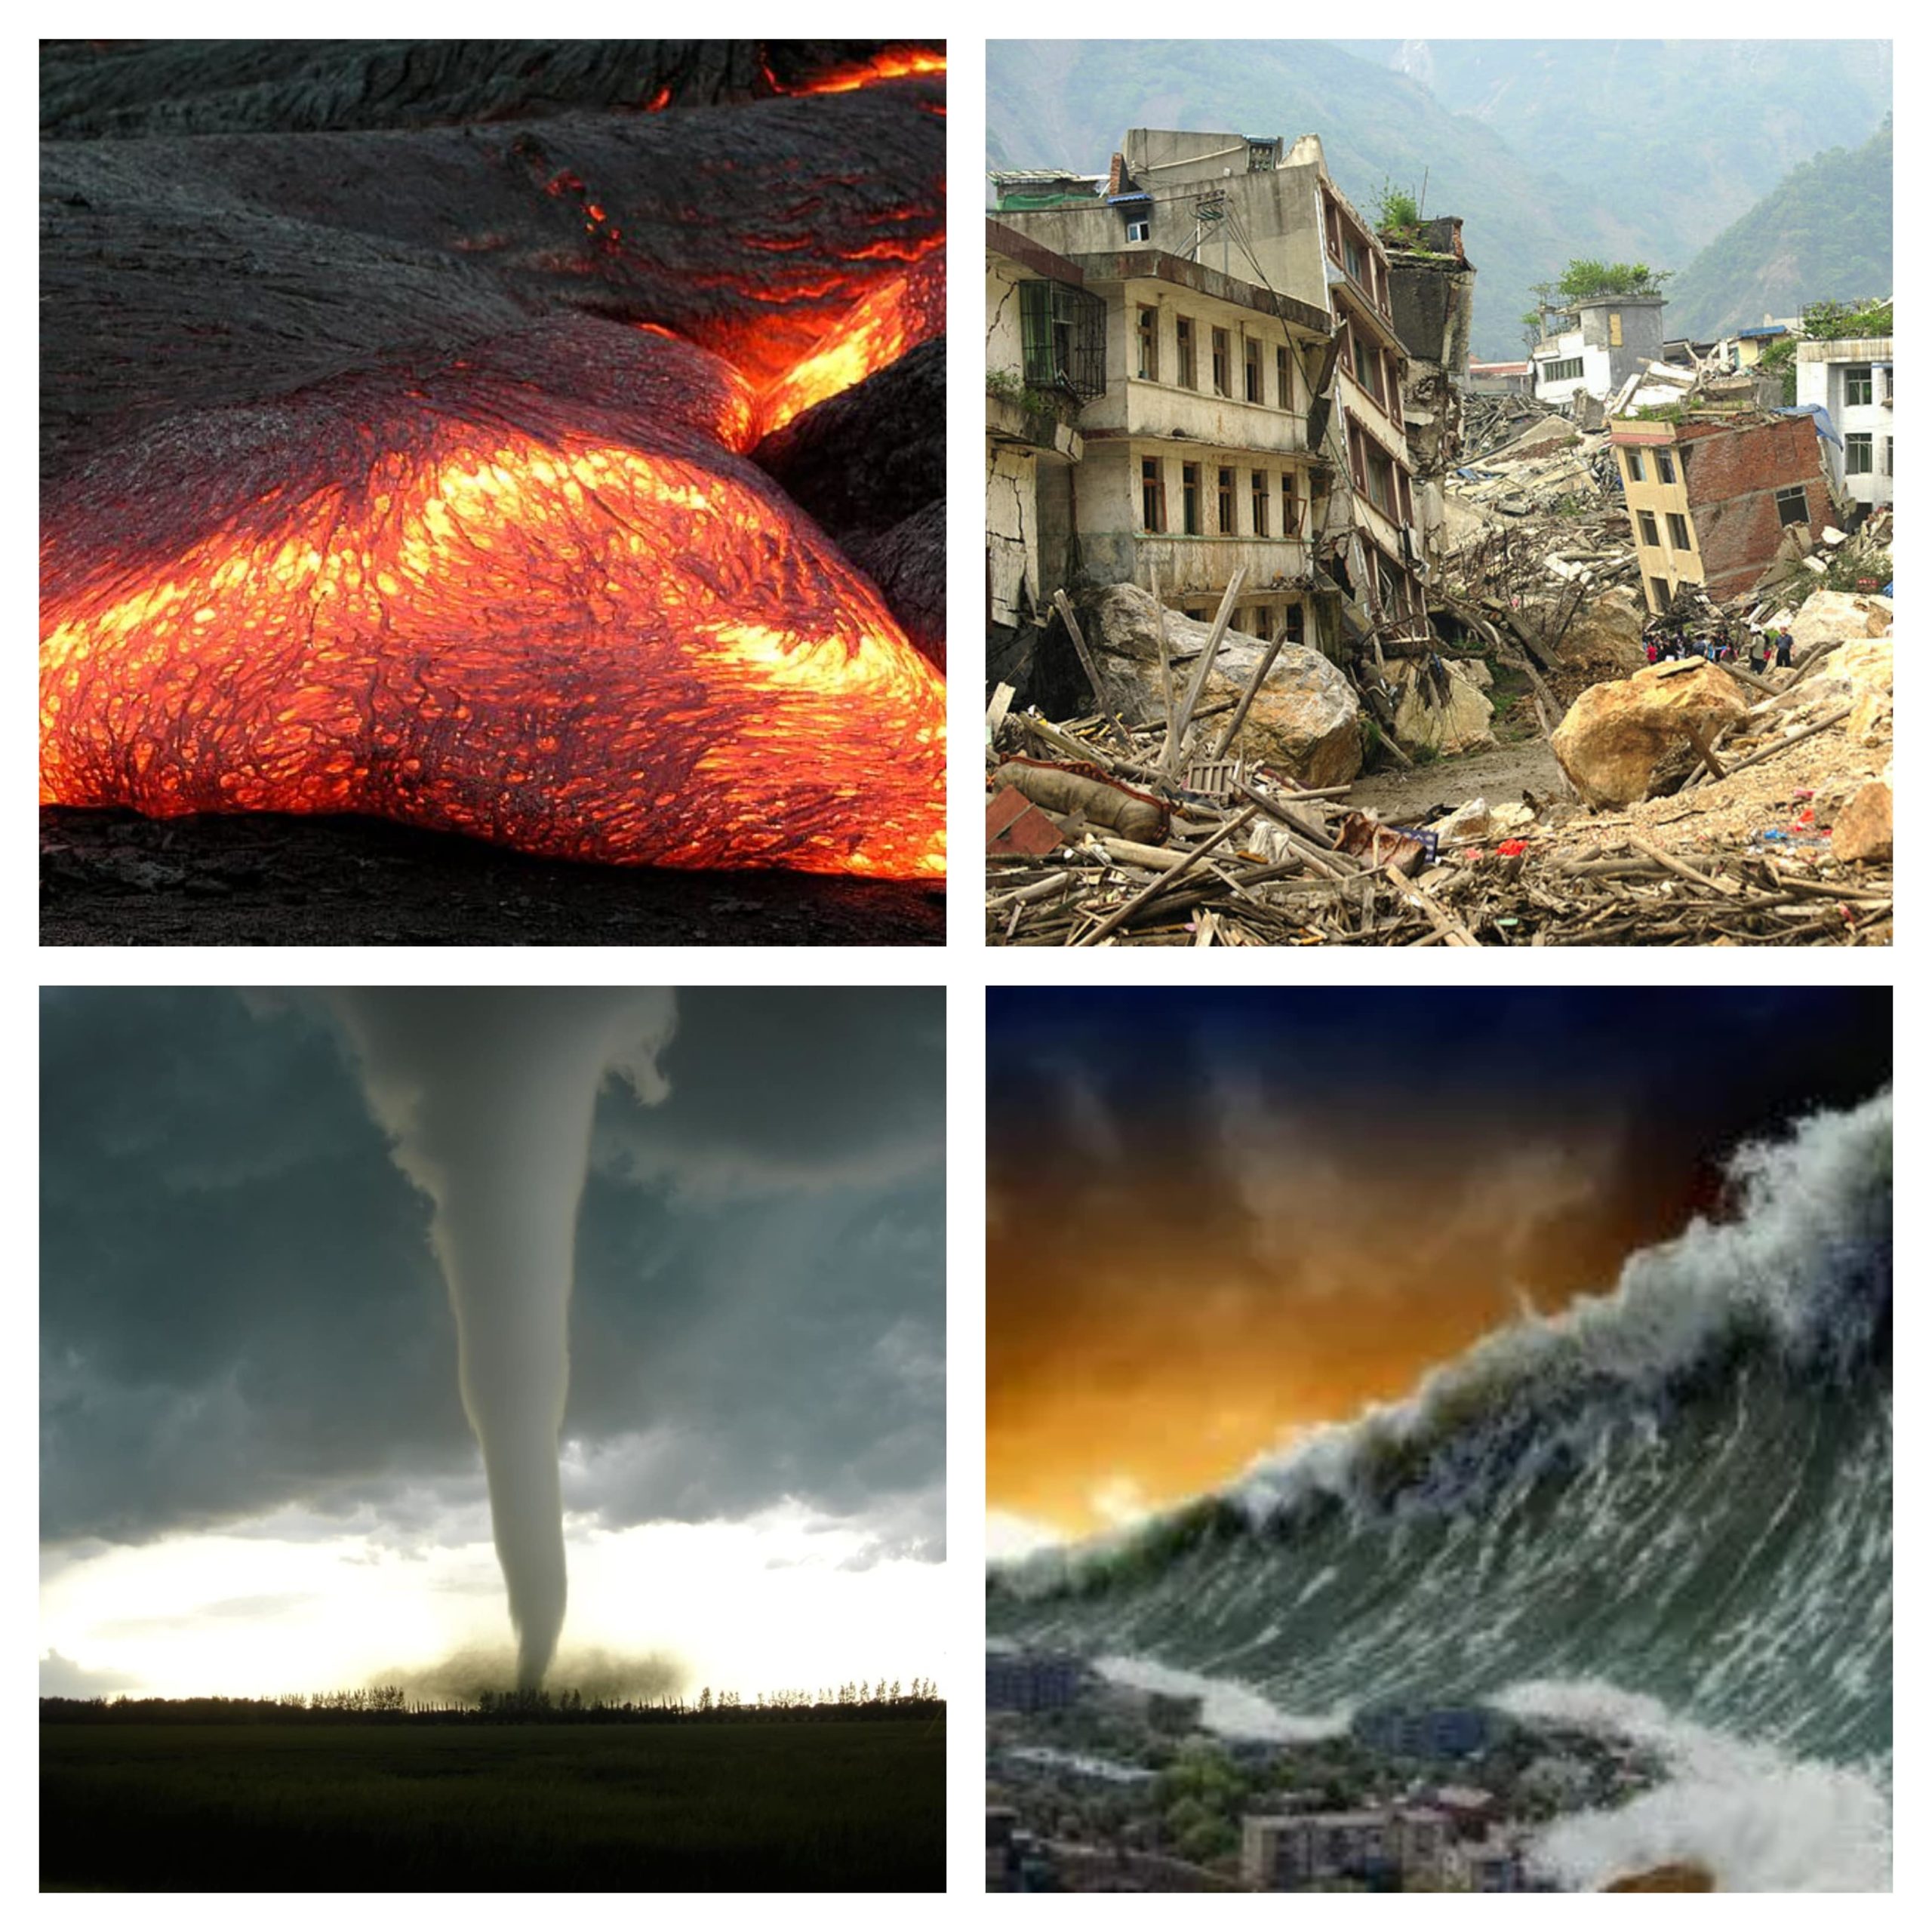 Disasters pictures. Природные катаклизмы. Природные бедствия. Стизх йные бедствия. Стихийные бедствия и катастрофы.